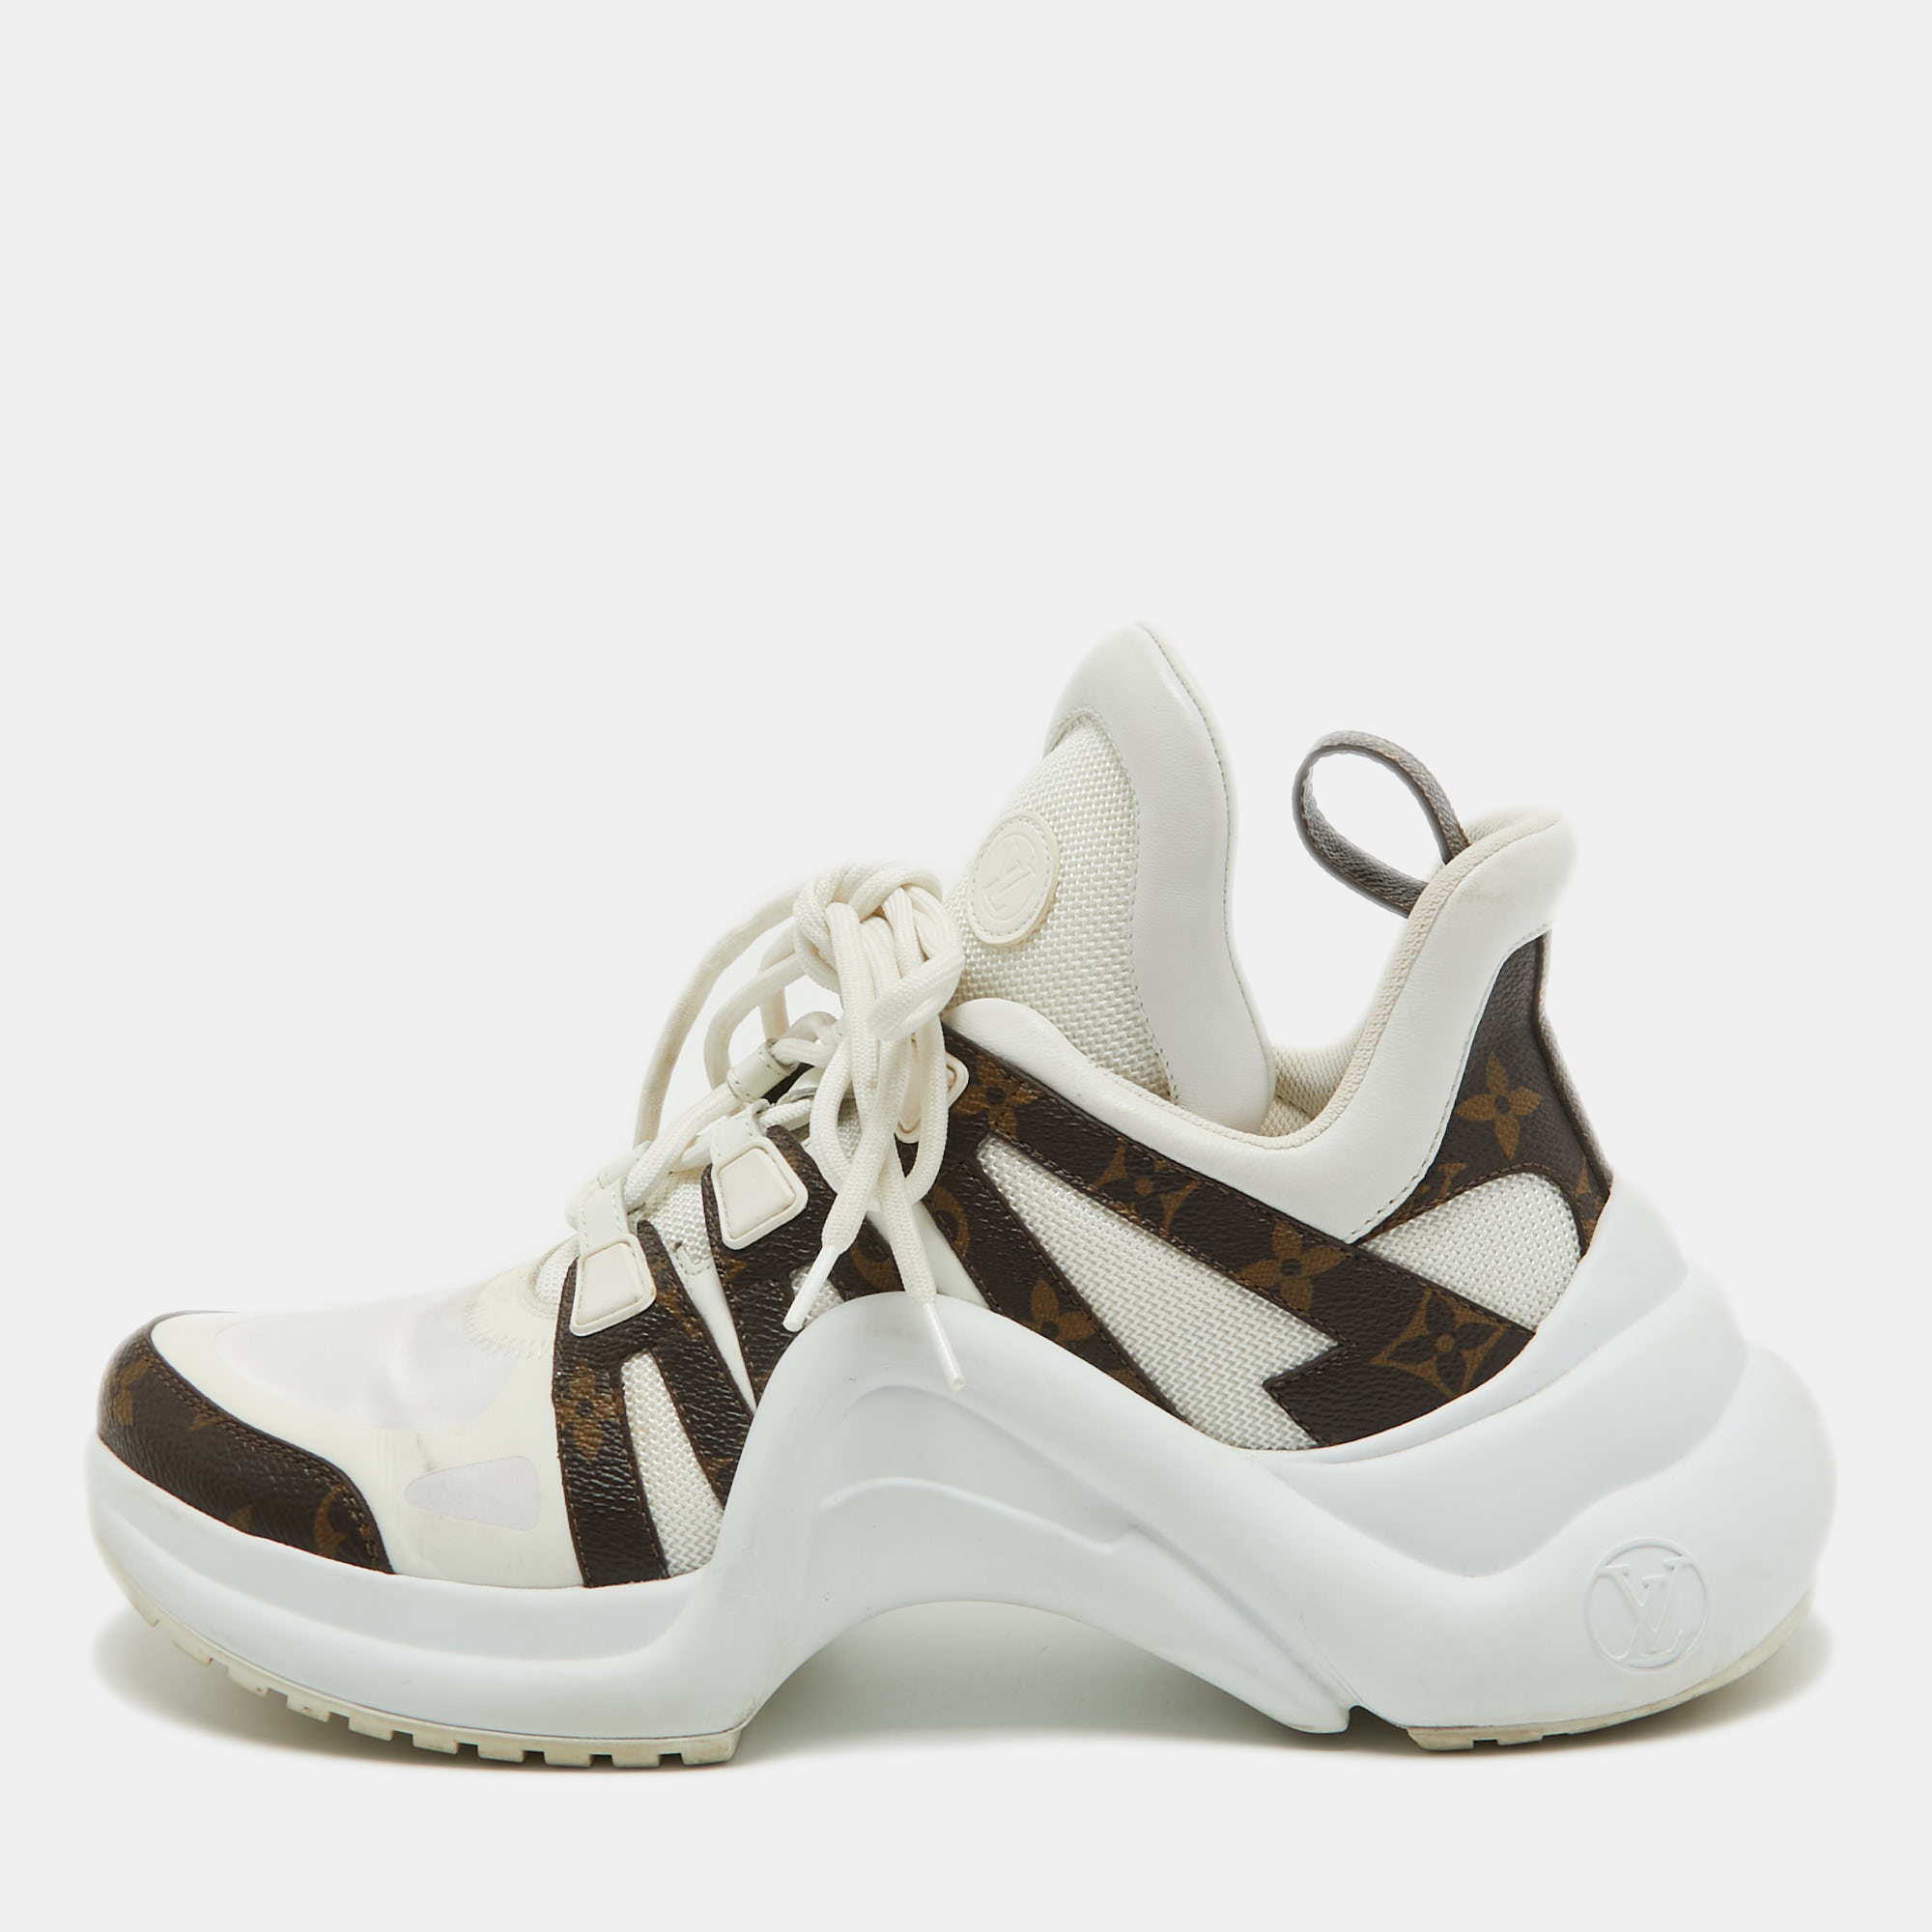 Louis vuitton white/brown nylon and monogram canvas archlight sneakers size 41